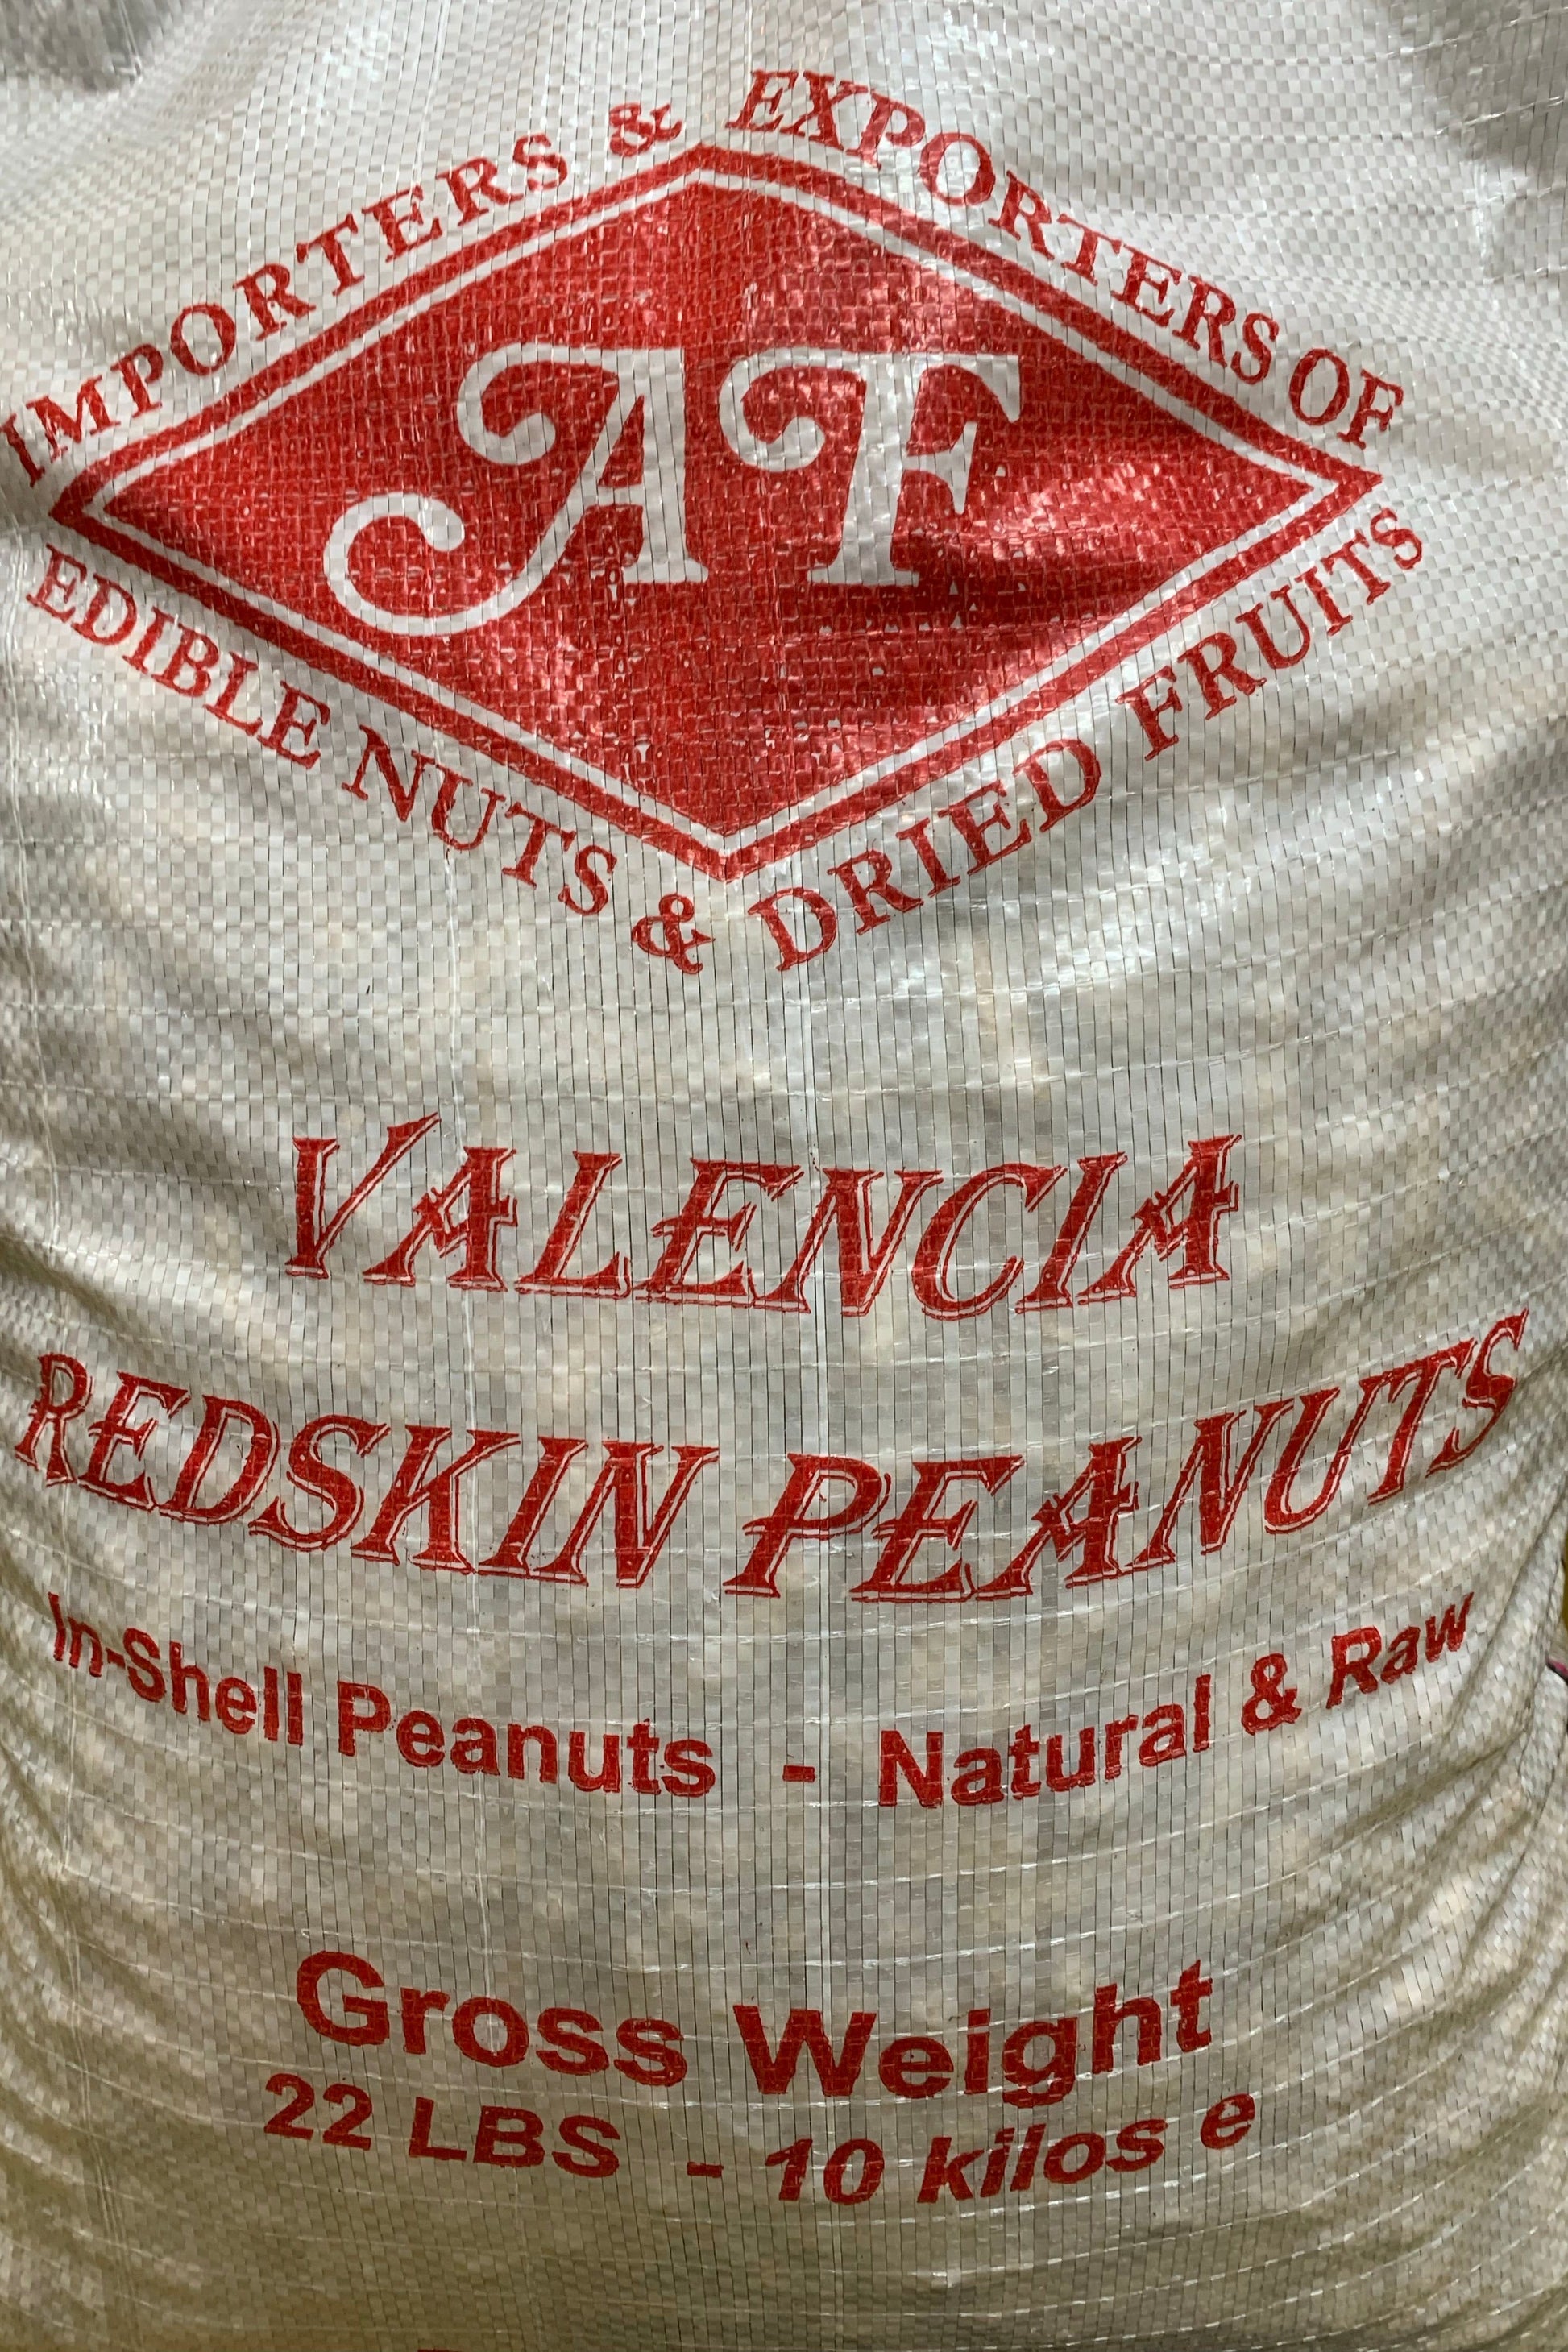 Peanuts in shell (x10kg) Bag - Jackie Leonards